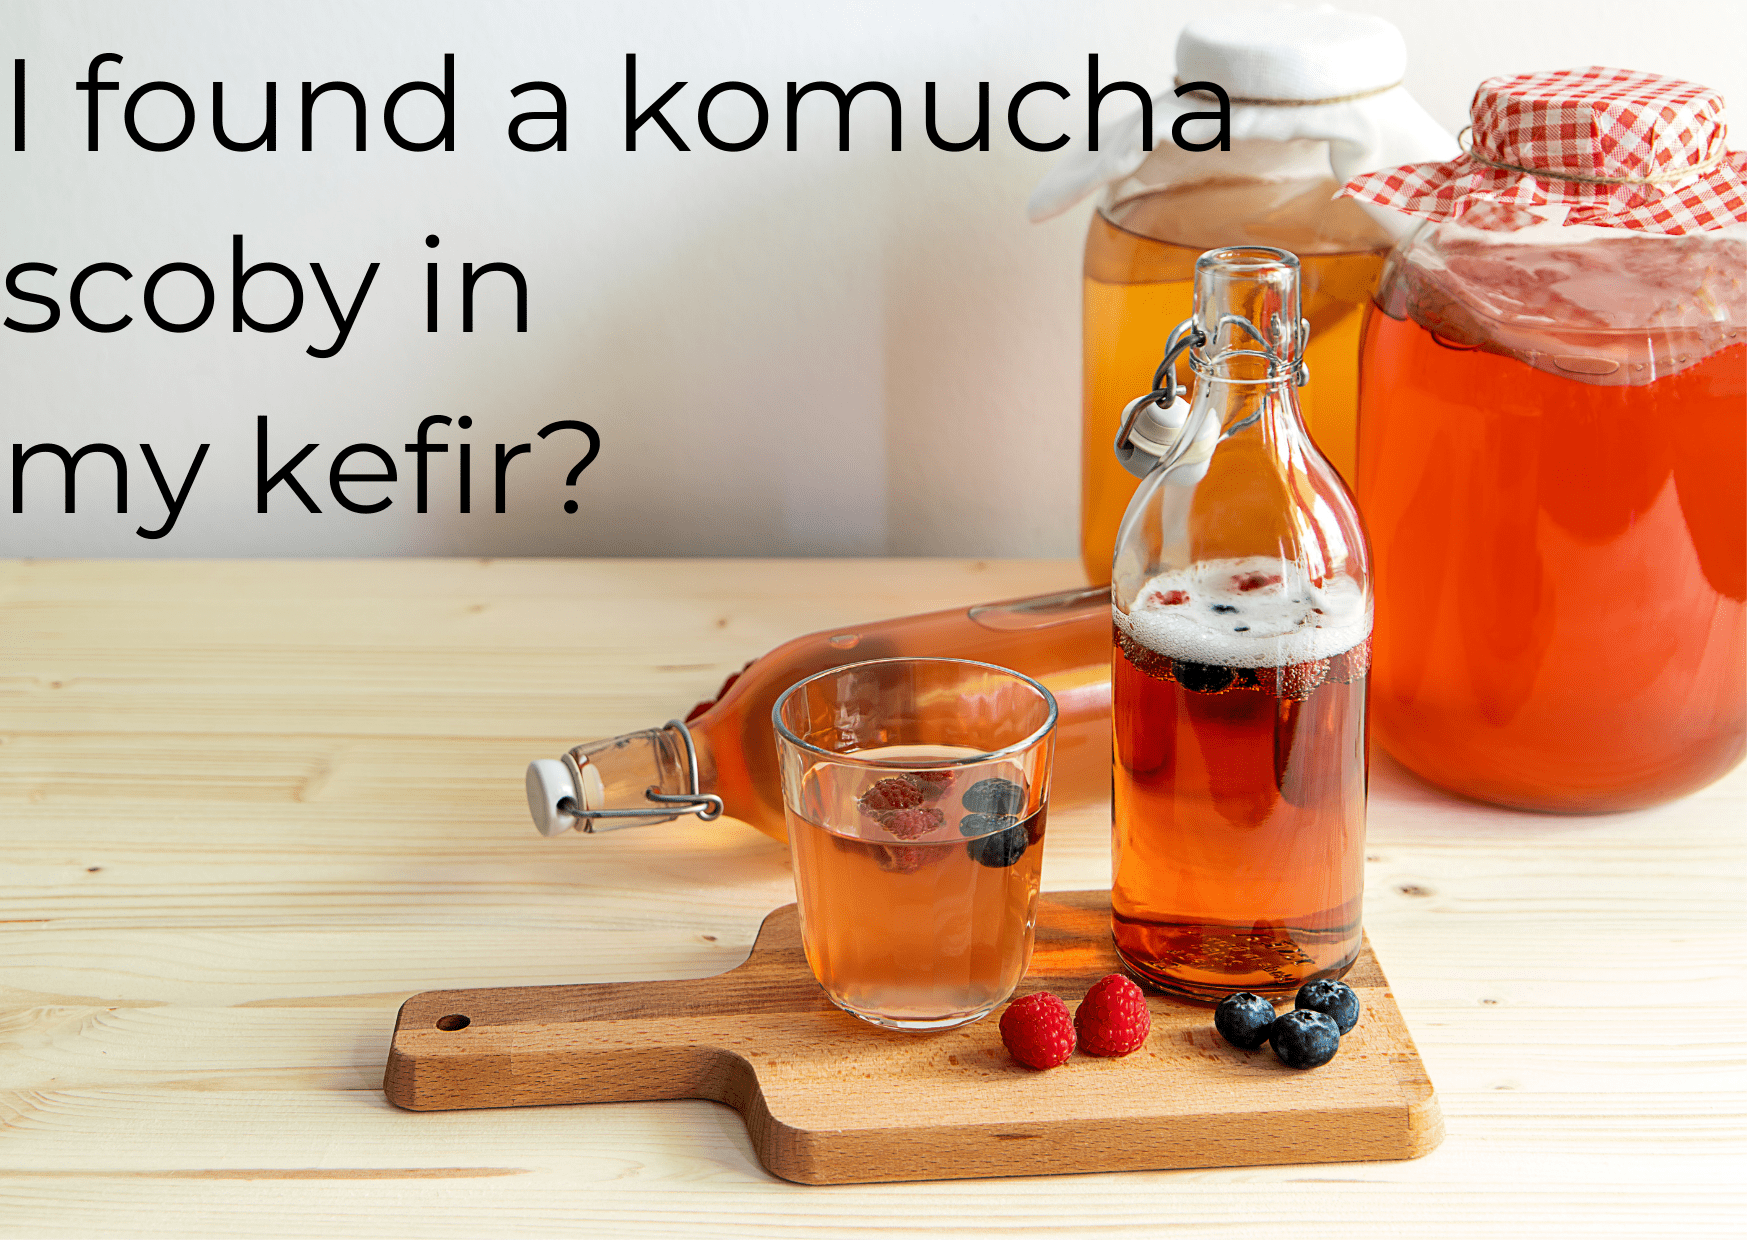 I found Kombucha in my kefir